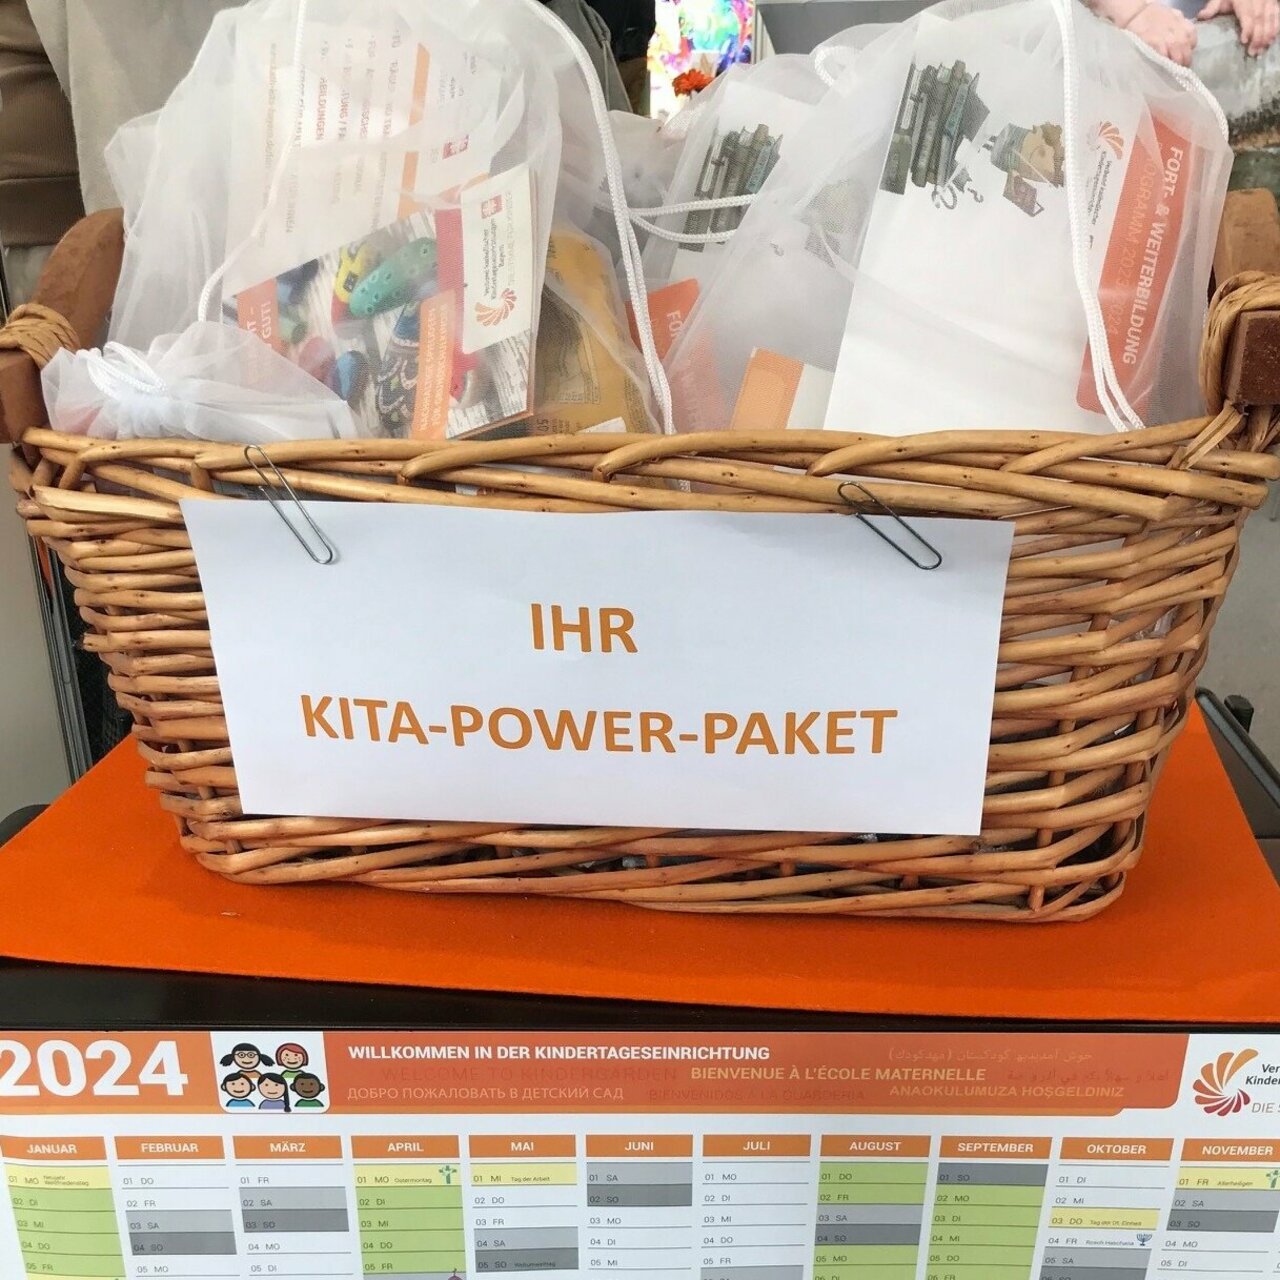 Kita-Power Paket als Give-Away aller Messepartner